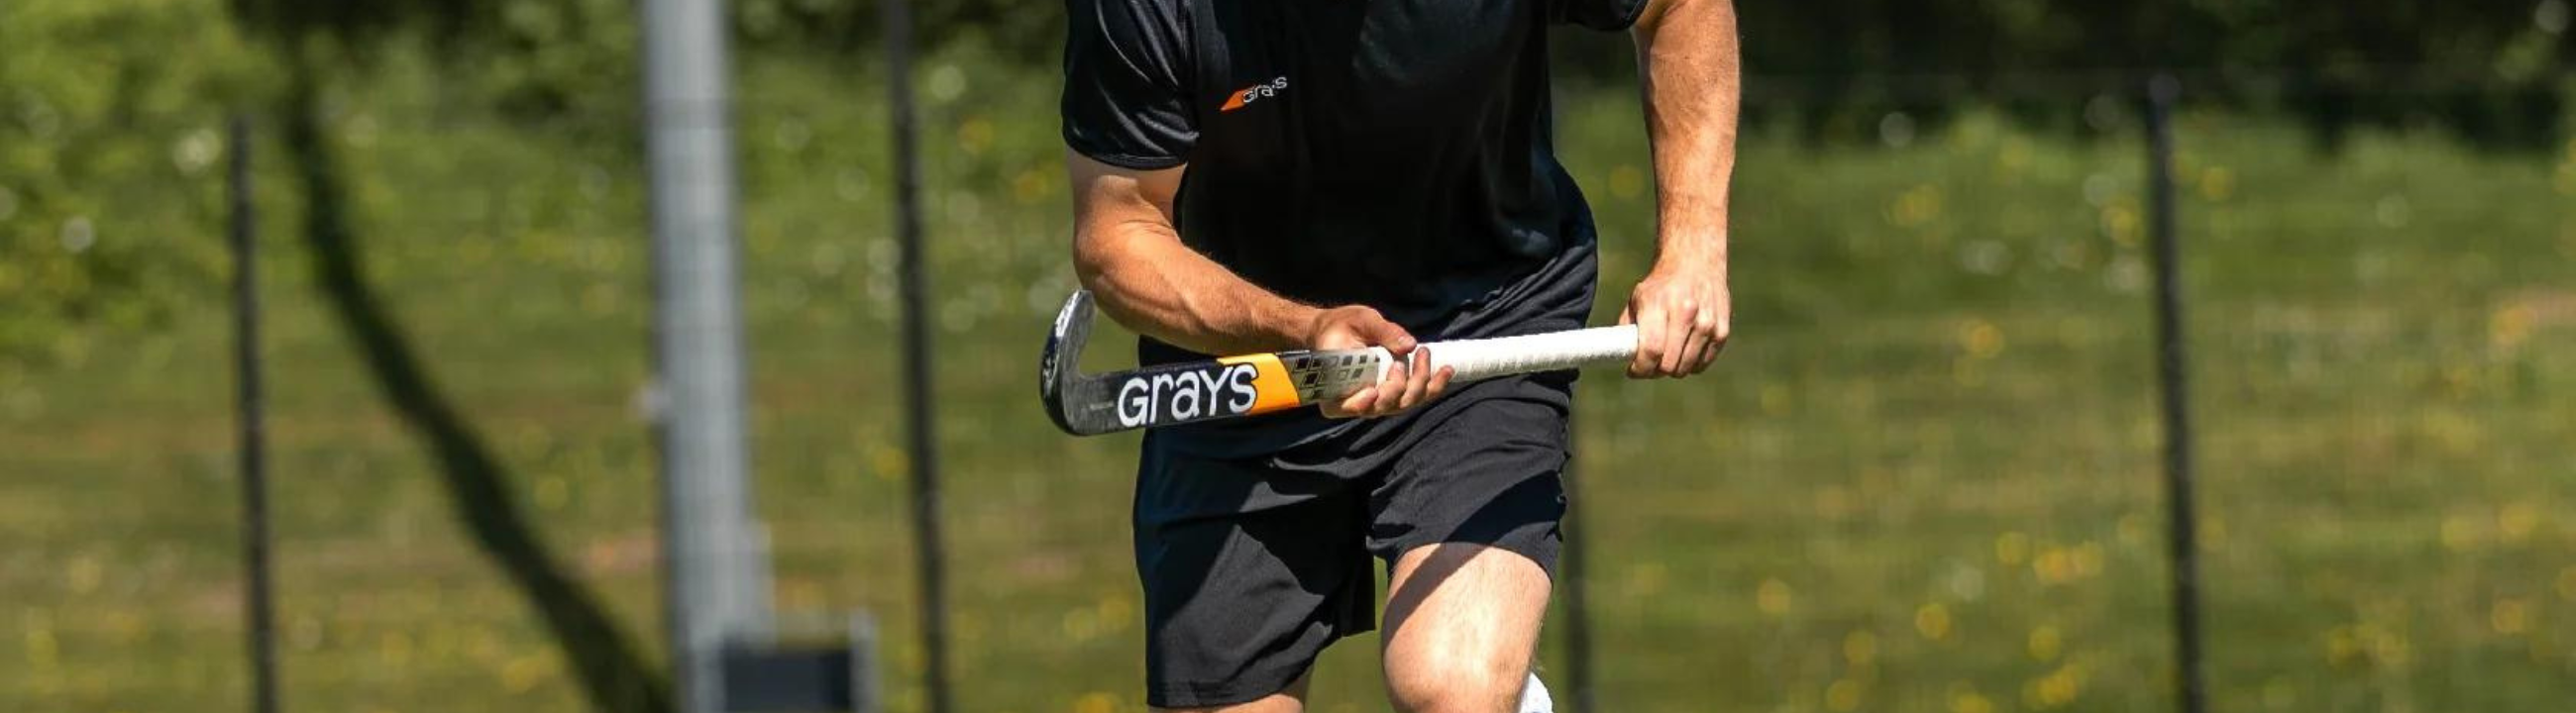 Grays Adult Hockey Sticks